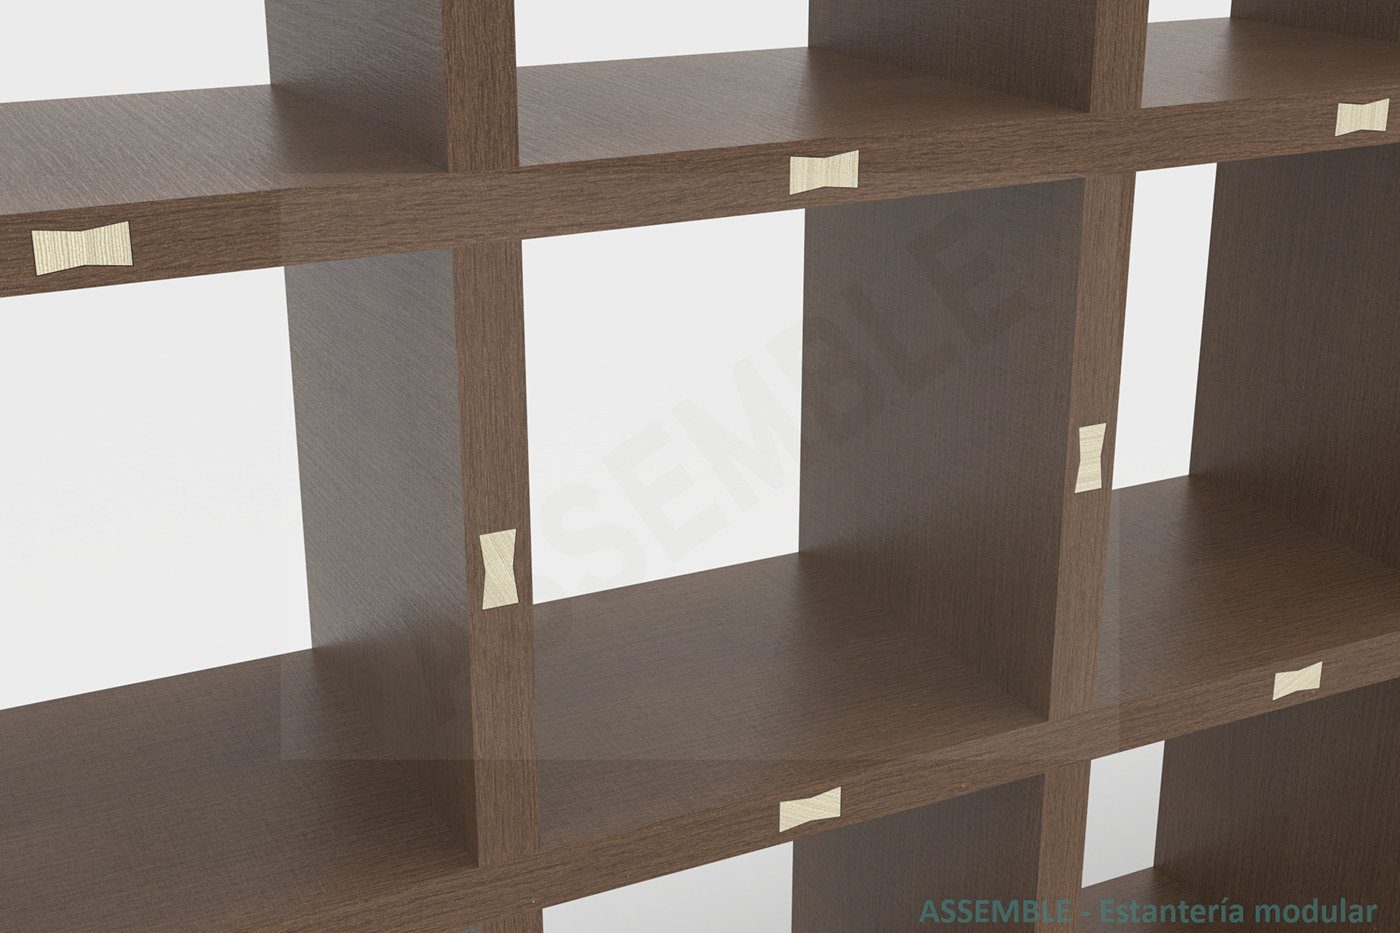 furniture wood interior design  modern mueble mobiliario madera Shelving carpinteria estanteria